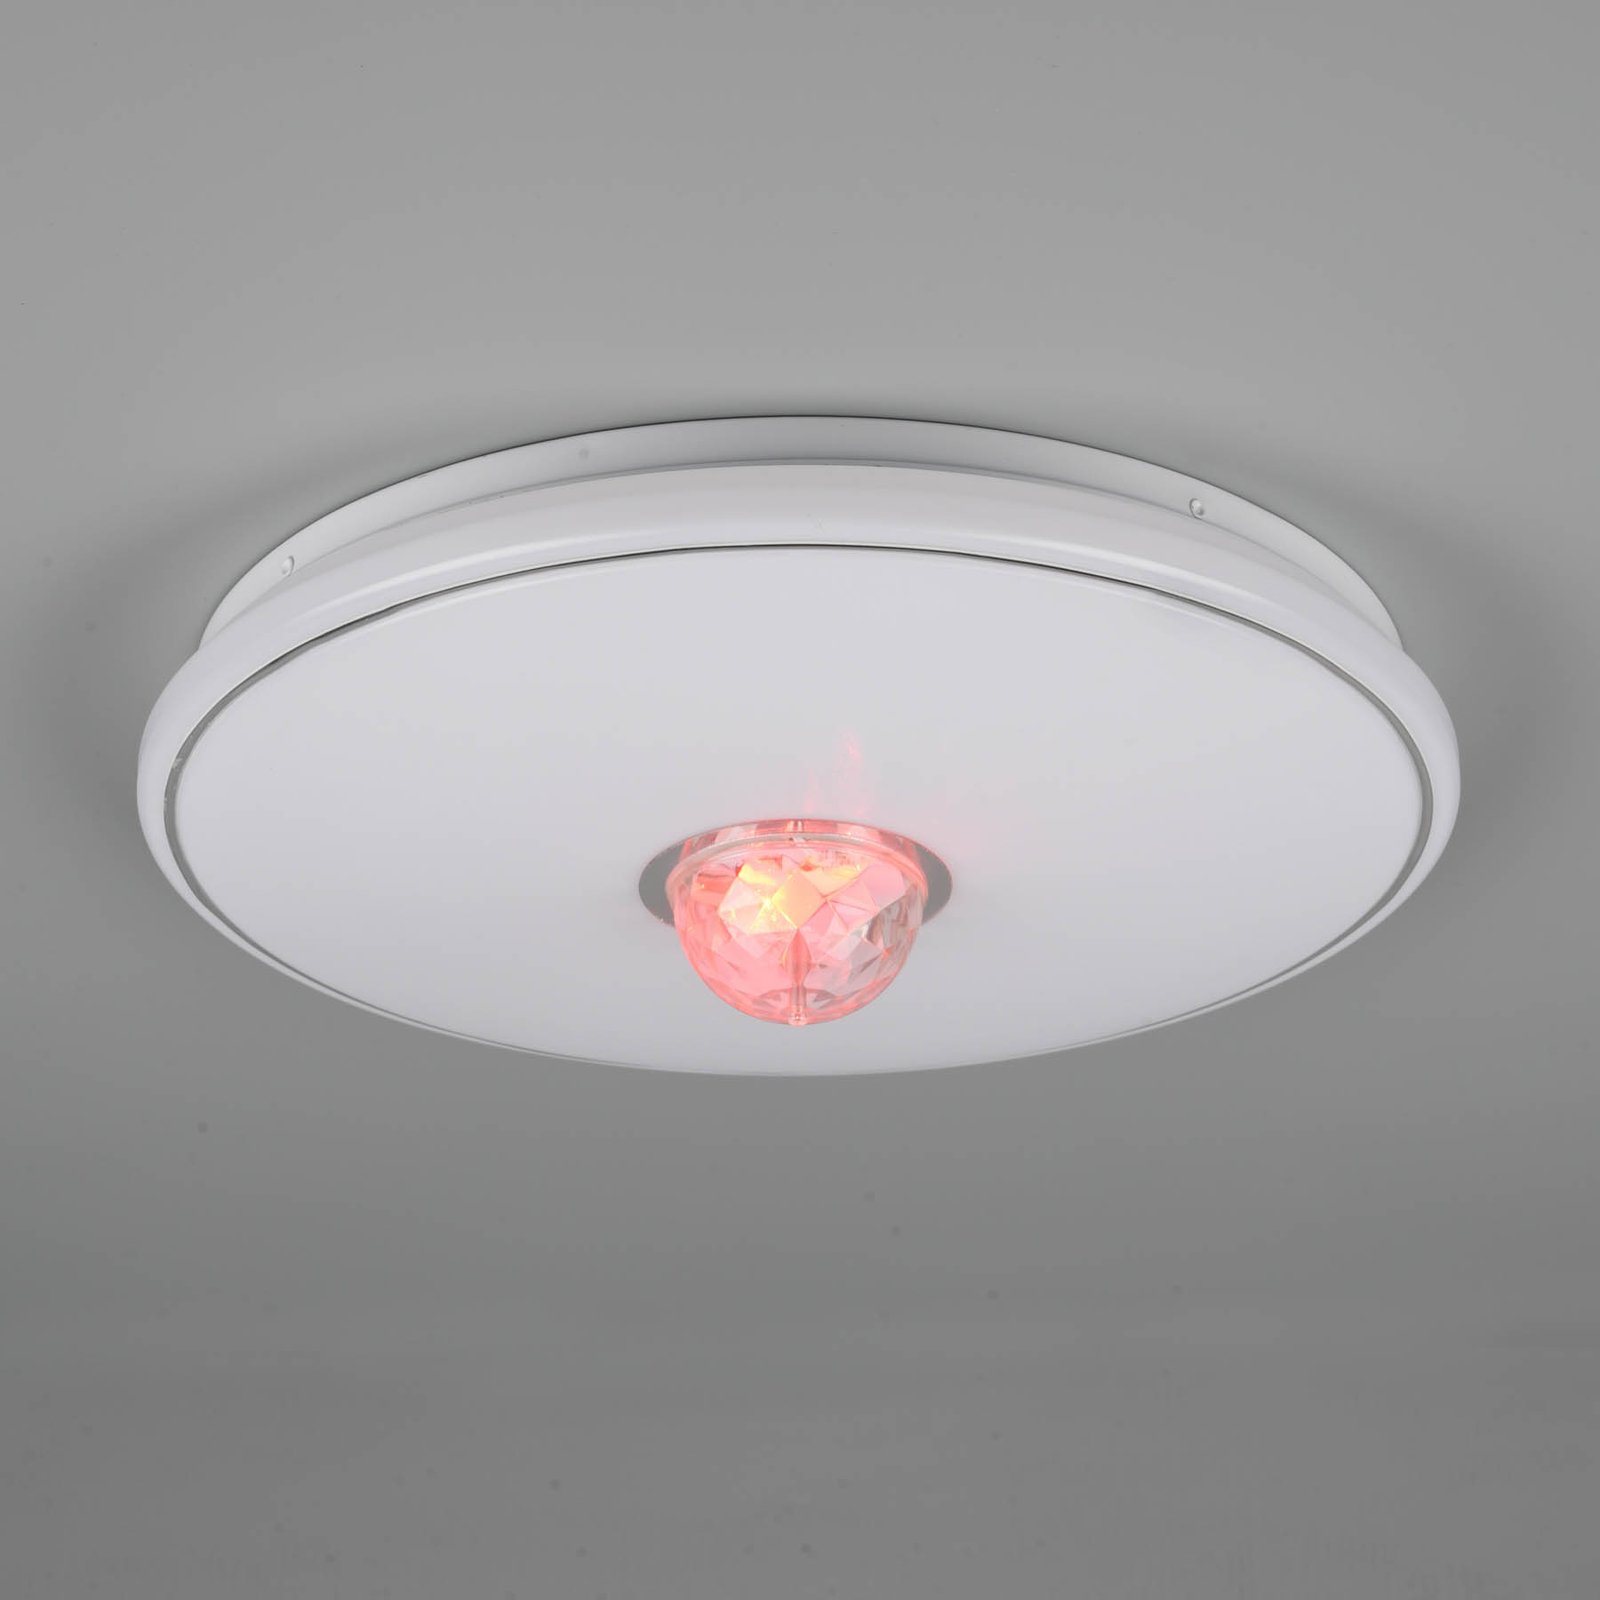 LED plafondlamp Rave afstandsbediening dimbaar RGB